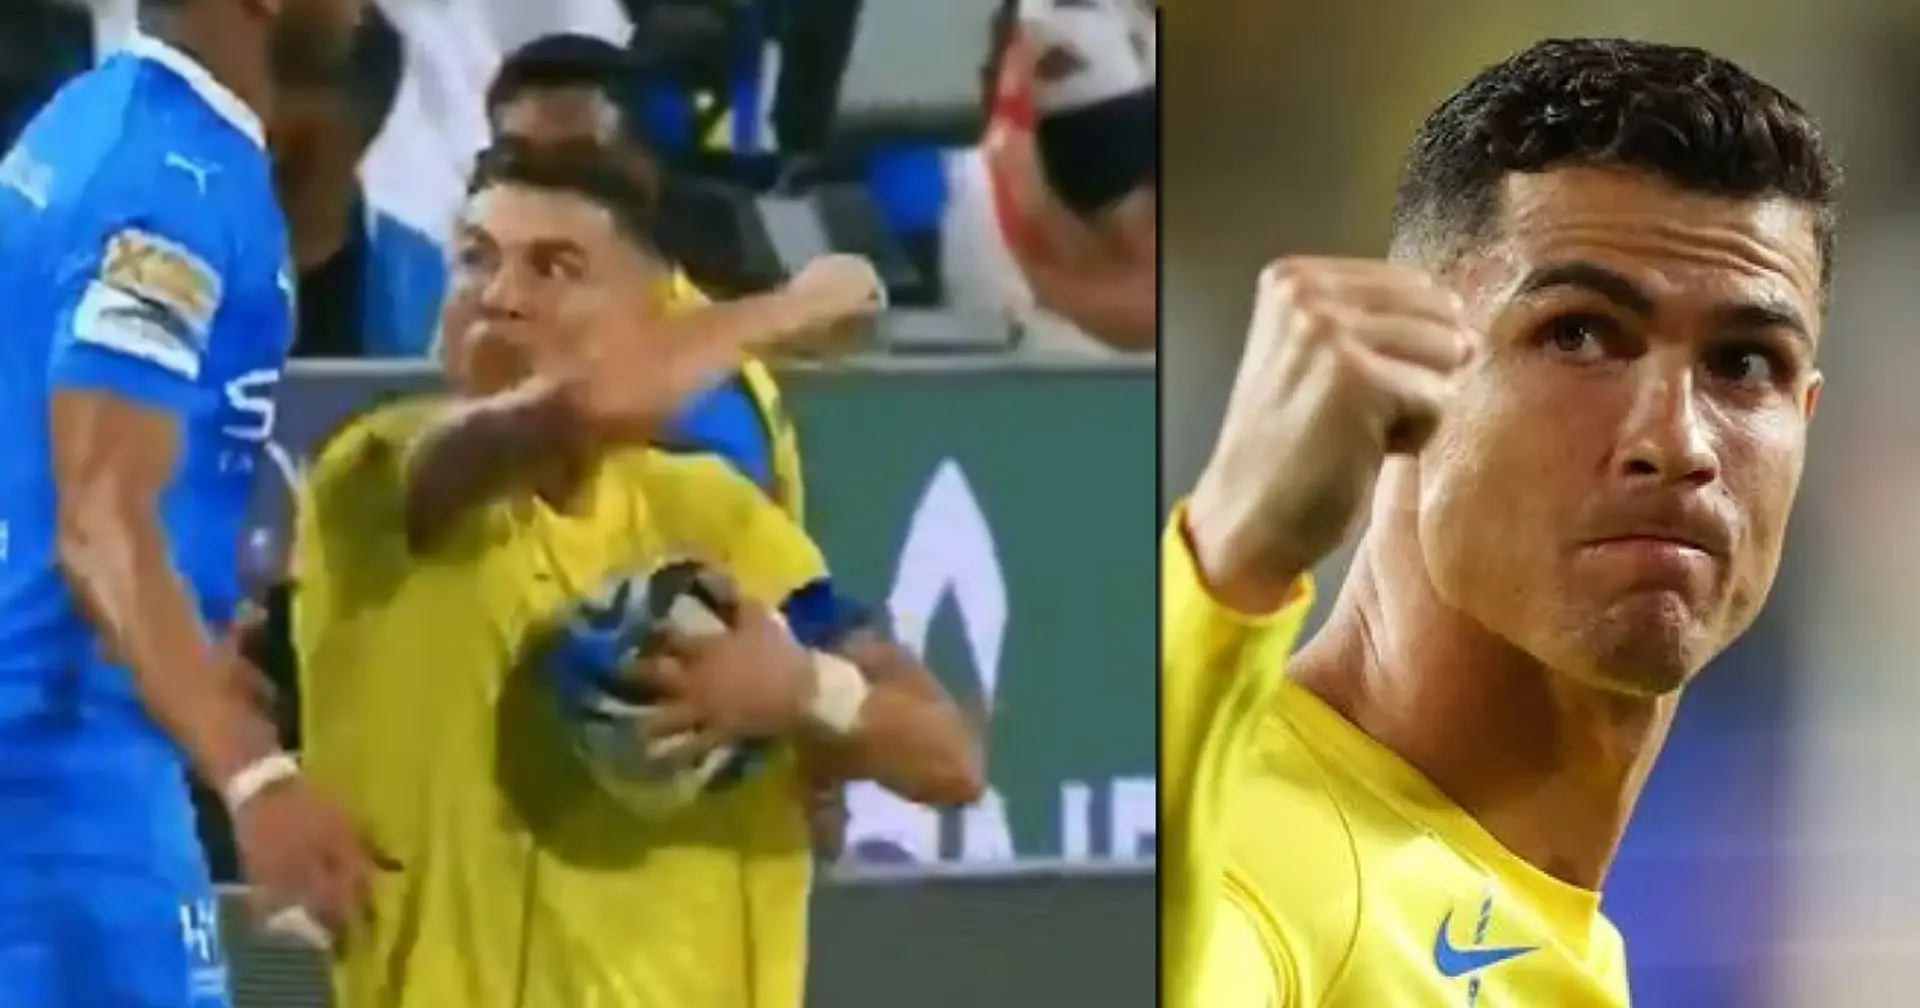 Cristiano Ronaldo reacts to his recent outburst in Saudi Arabia, potential punishment revealed